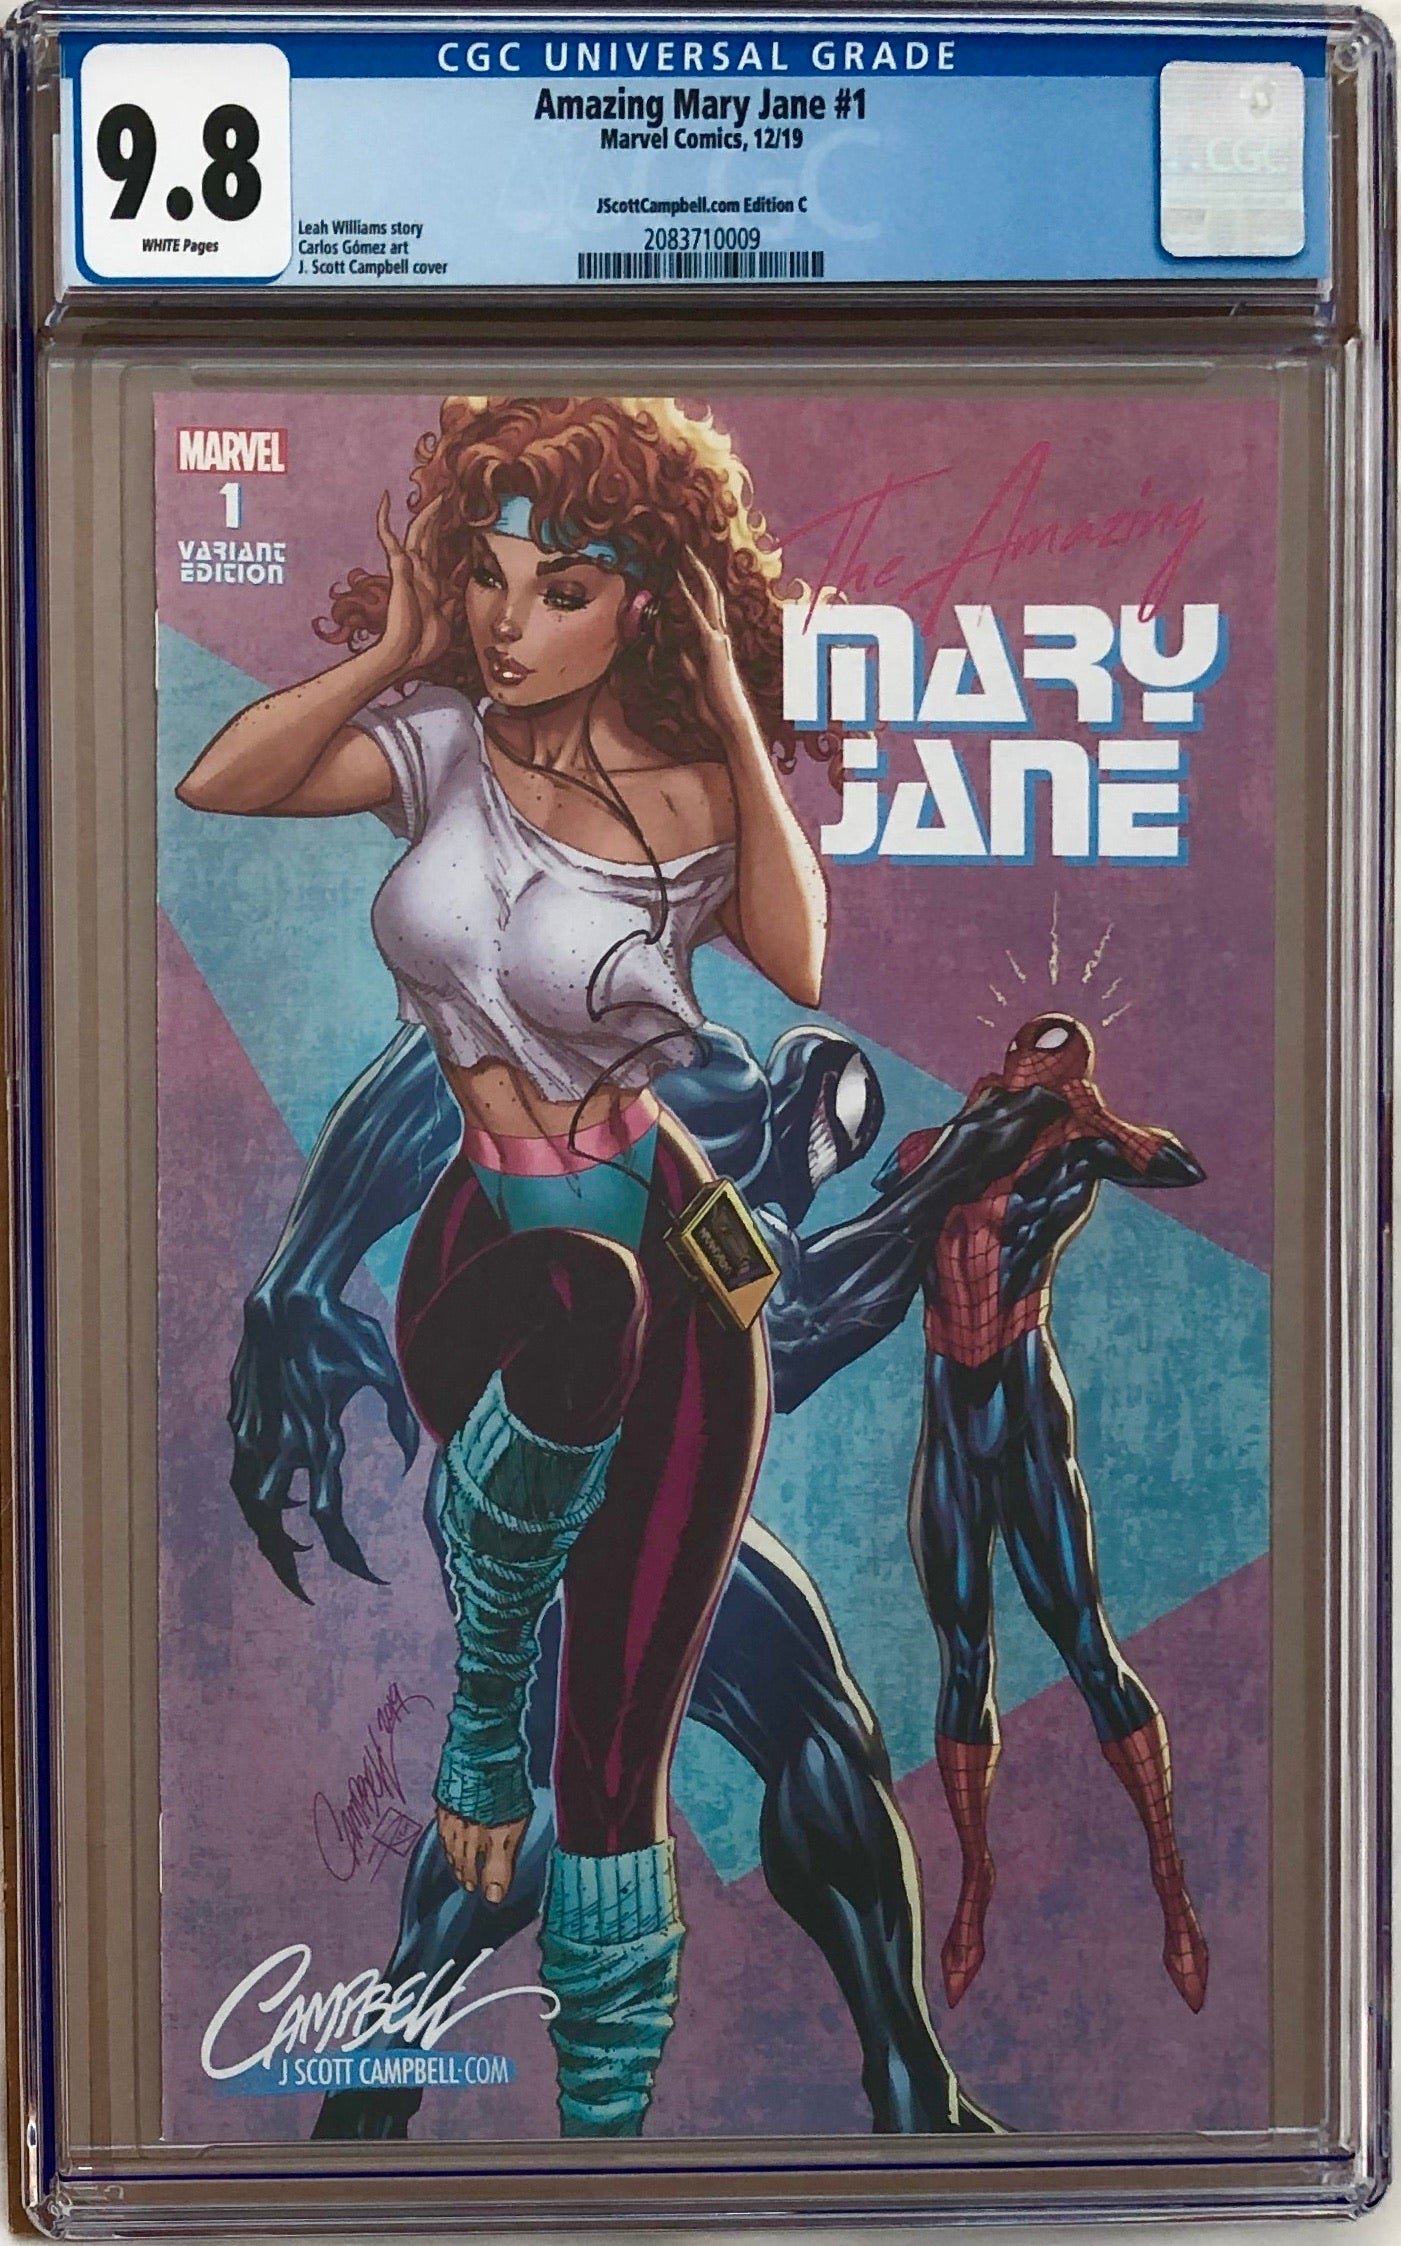 Amazing Mary Jane #1 J. Scott Campbell Exclusive C - "80s - Venom n' leg-warmers" CGC 9.8